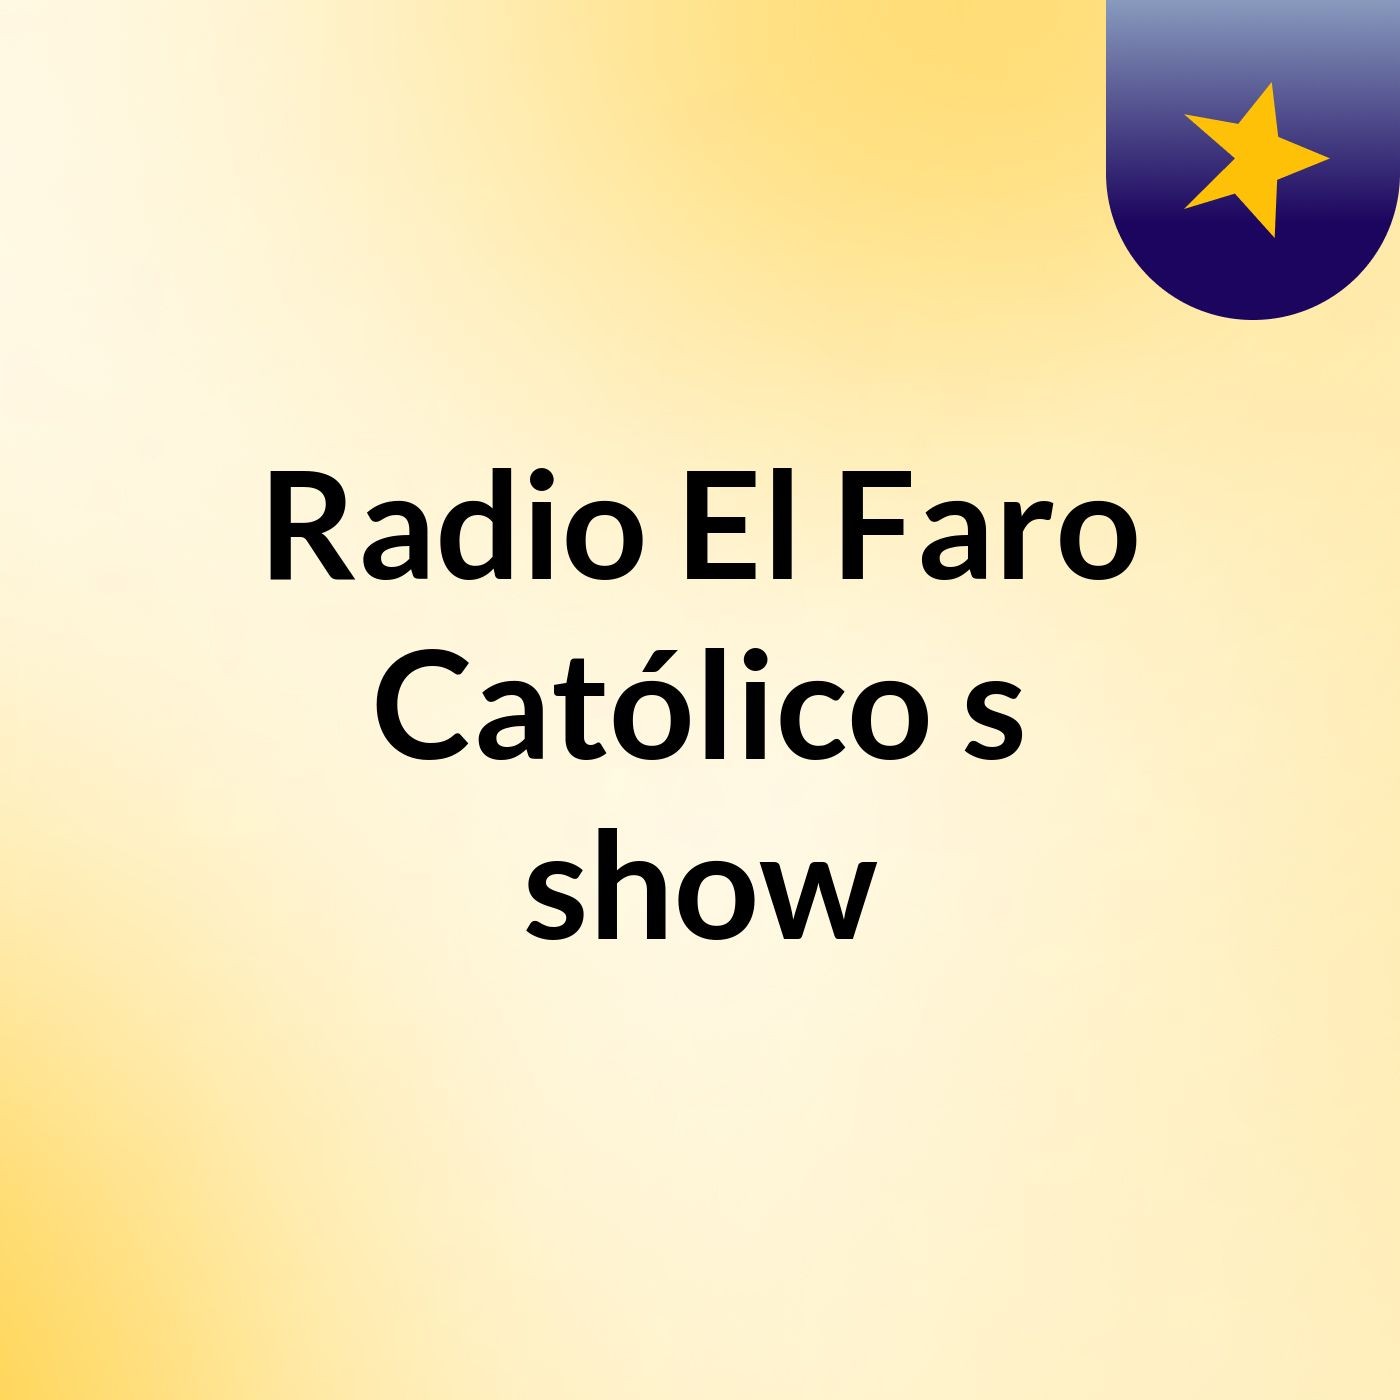 Radio El Faro Católico's show